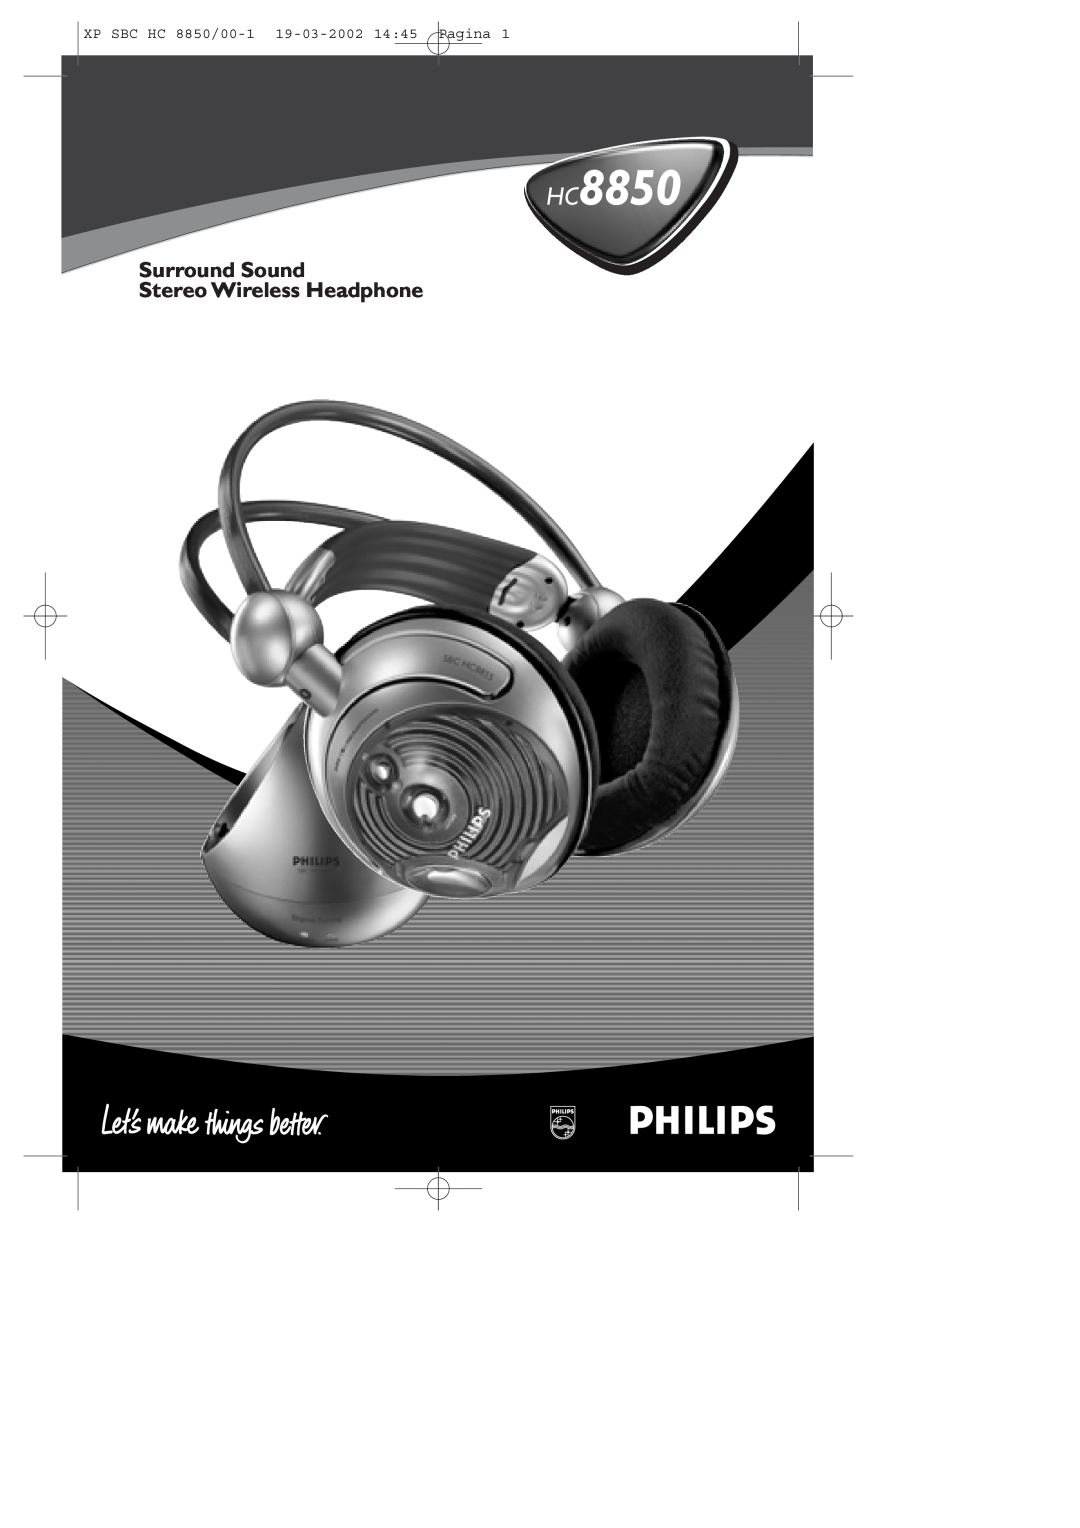 Philips HC8850 manual Surround Sound Stereo Wireless Headphone, XP SBC HC 8850/00-1 19-03-200214 45 Pagina 